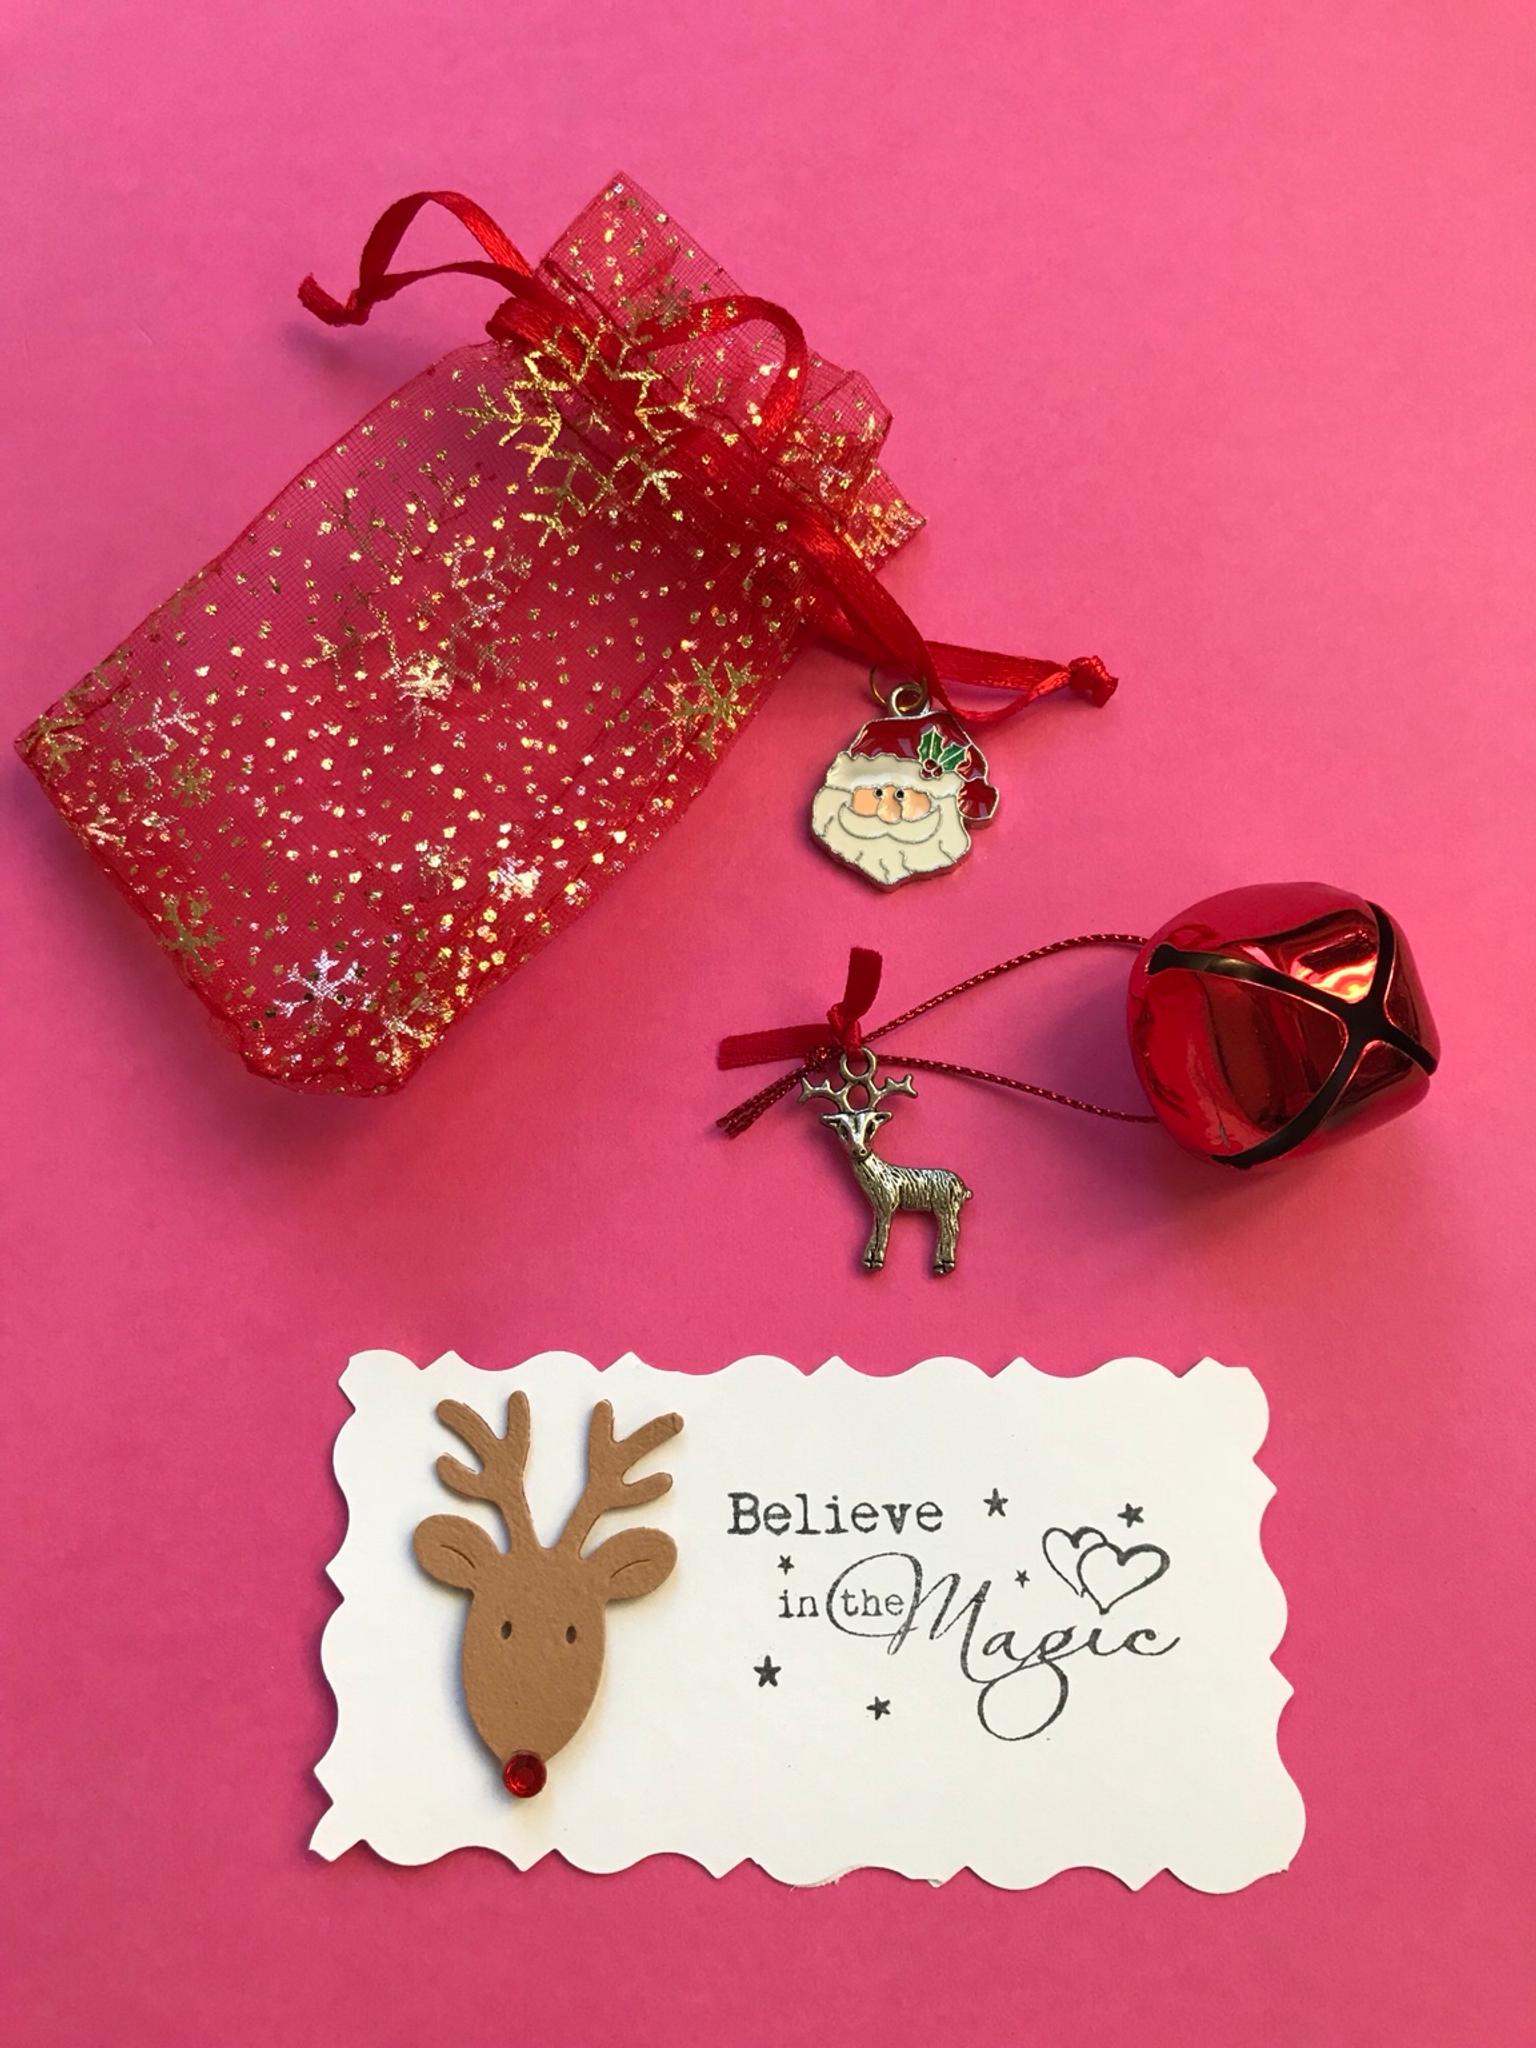 NEW Polar Express Bell Rudolph /& Believe Children/'s Santa Christmas Bag Charm